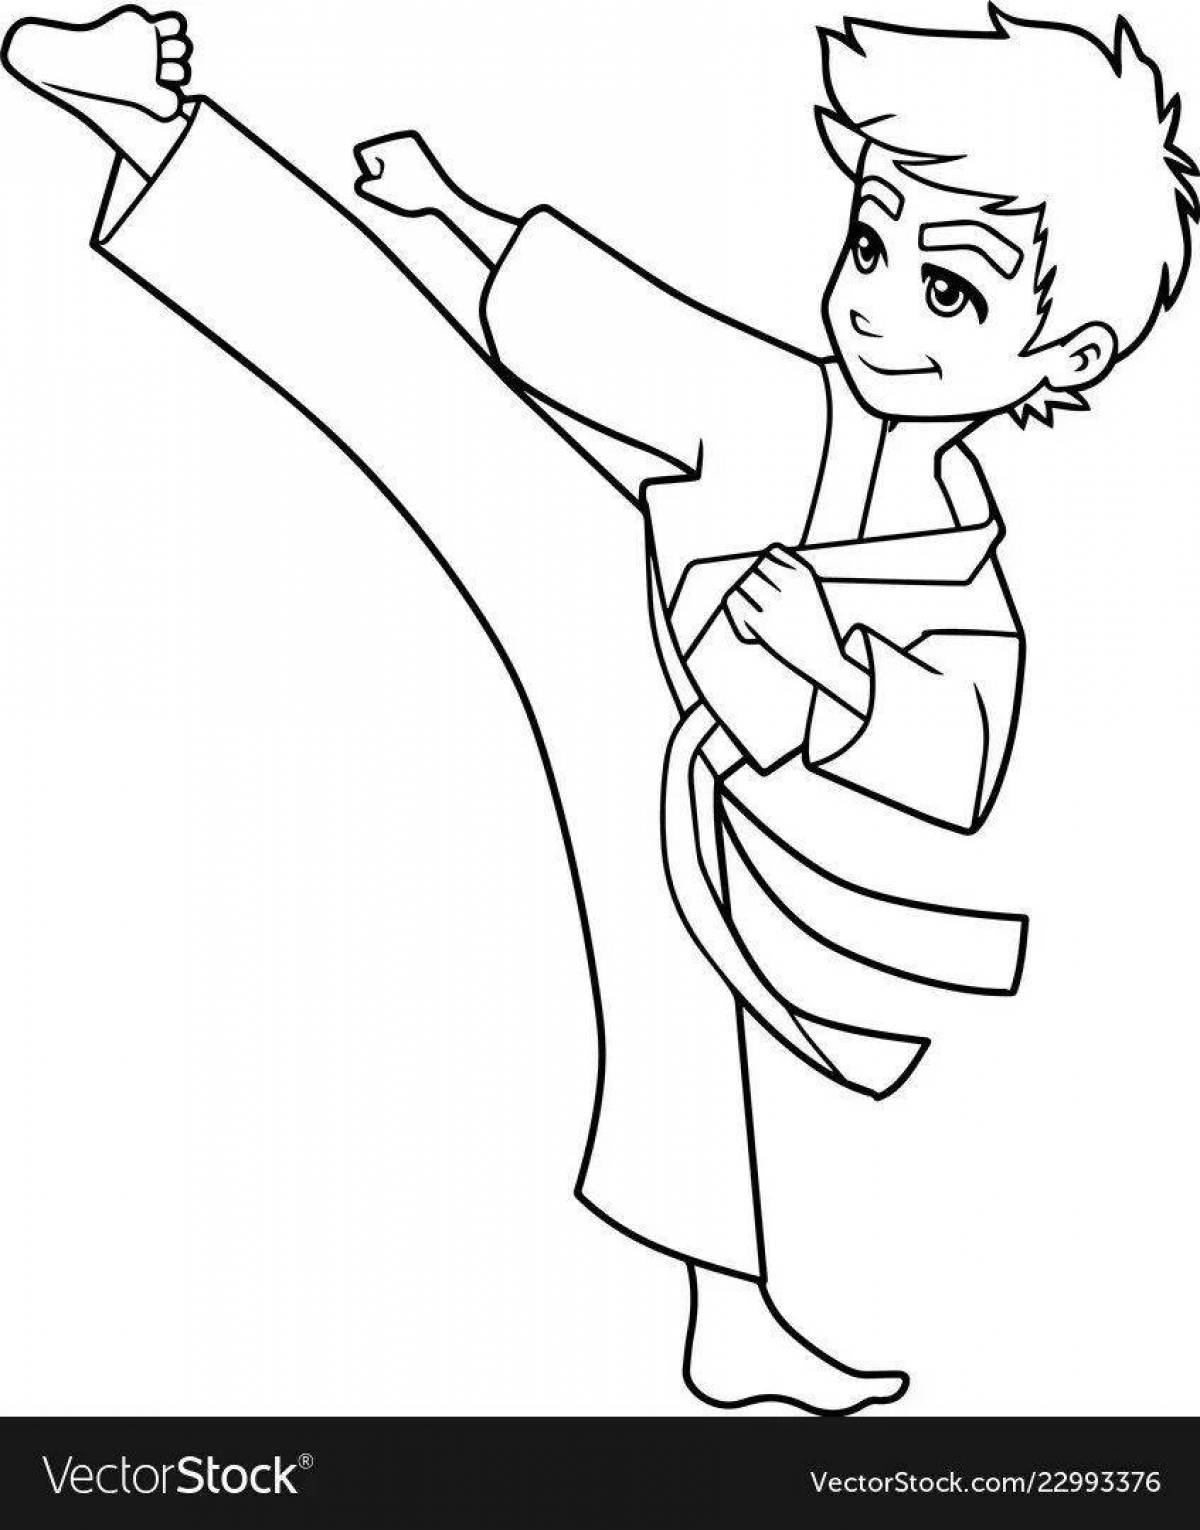 Shine taekwondo coloring page